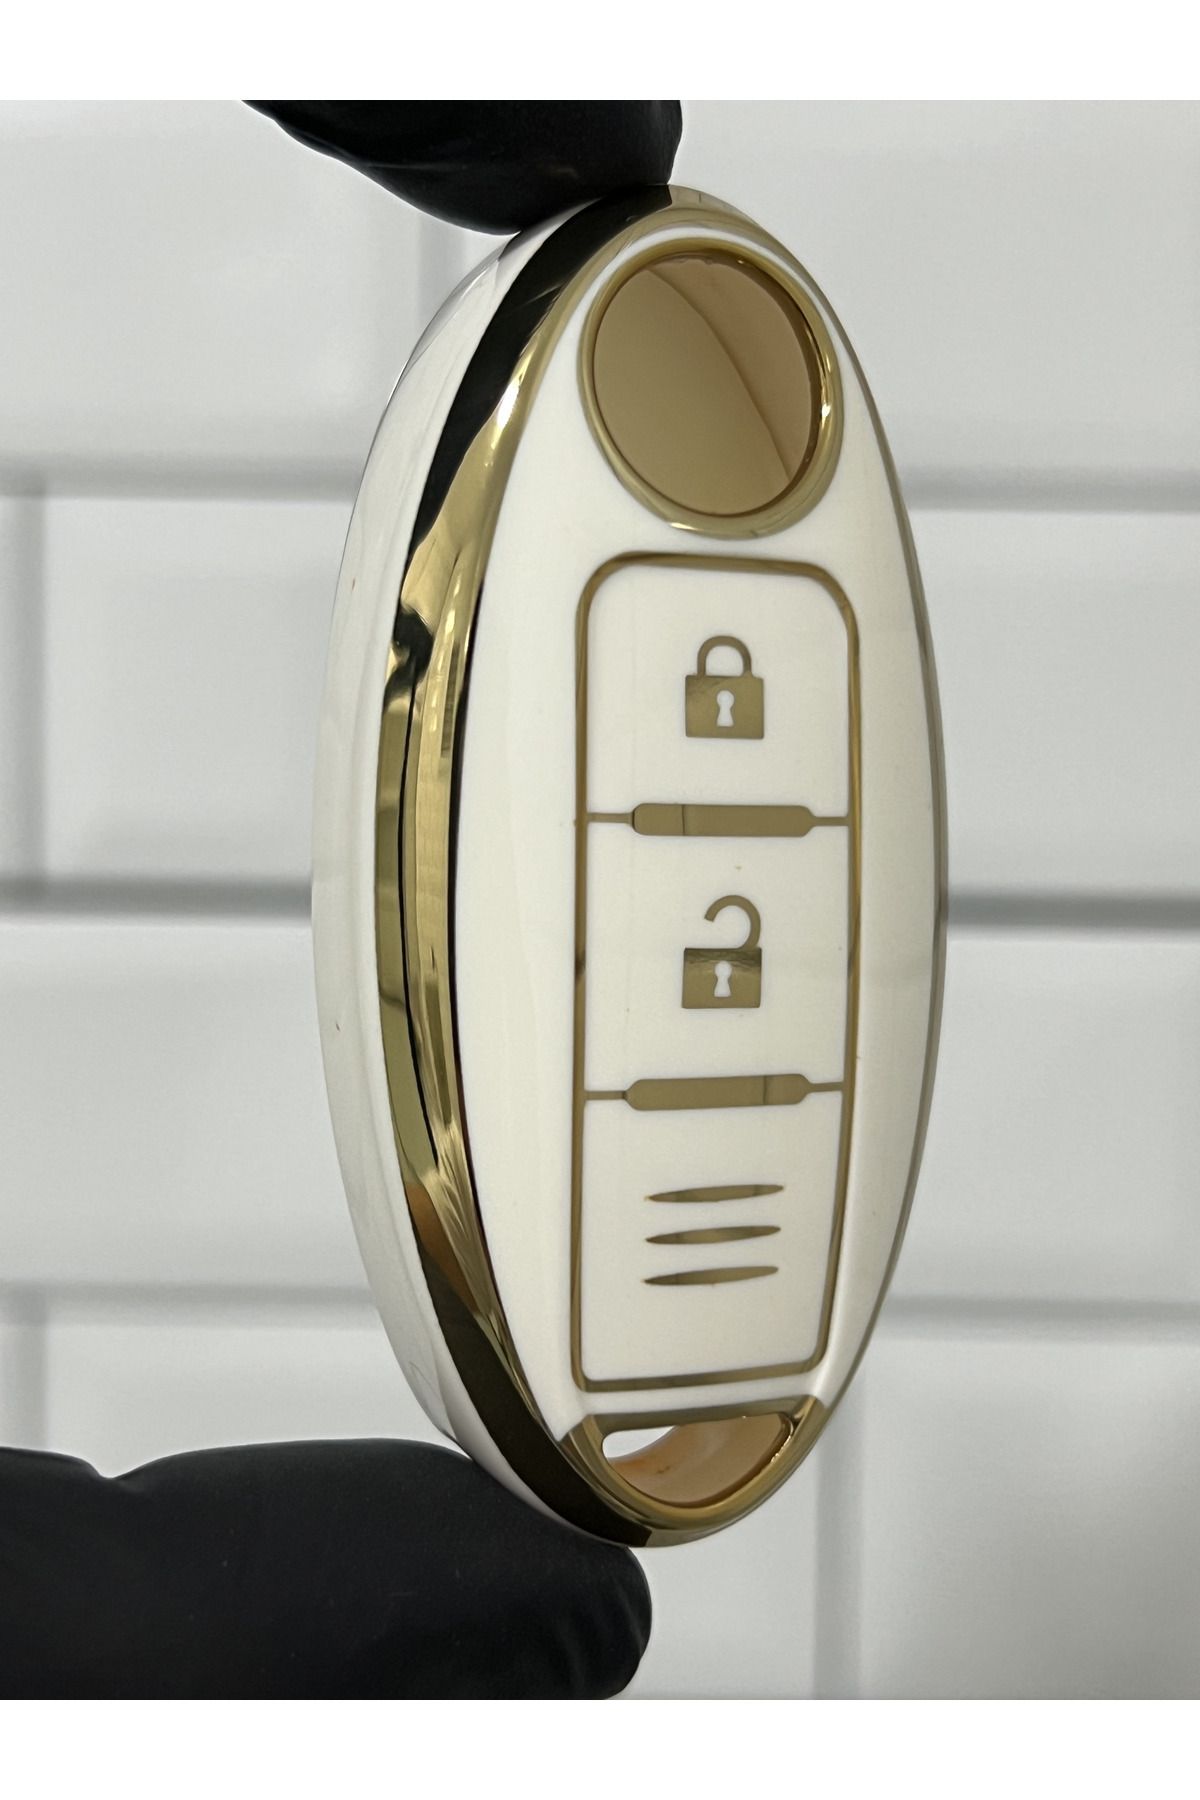 GMA KEYS Lüx Nissan Micra Juke Qashqai Note Navara Pulsar Smart Nano Anahtar Kılıfı Beyaz Gold Altın Renk